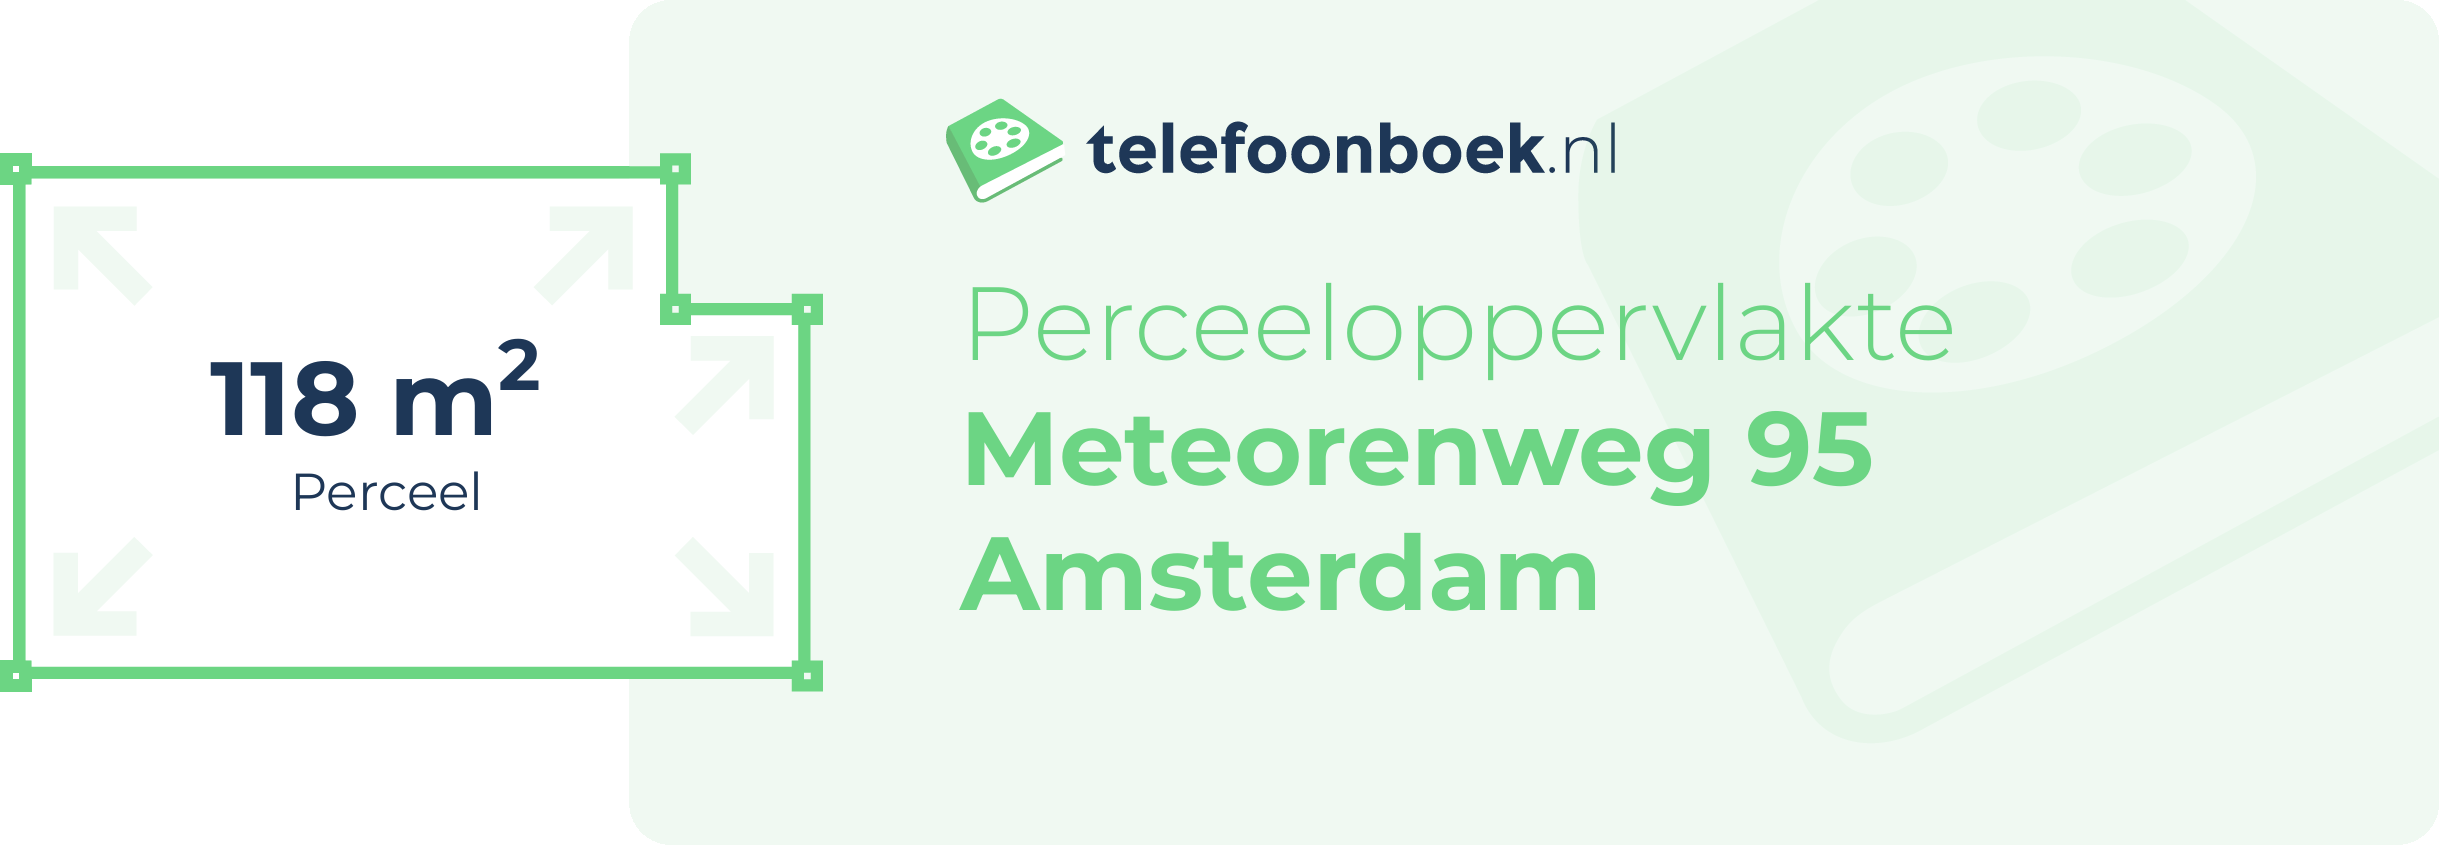 Perceeloppervlakte Meteorenweg 95 Amsterdam